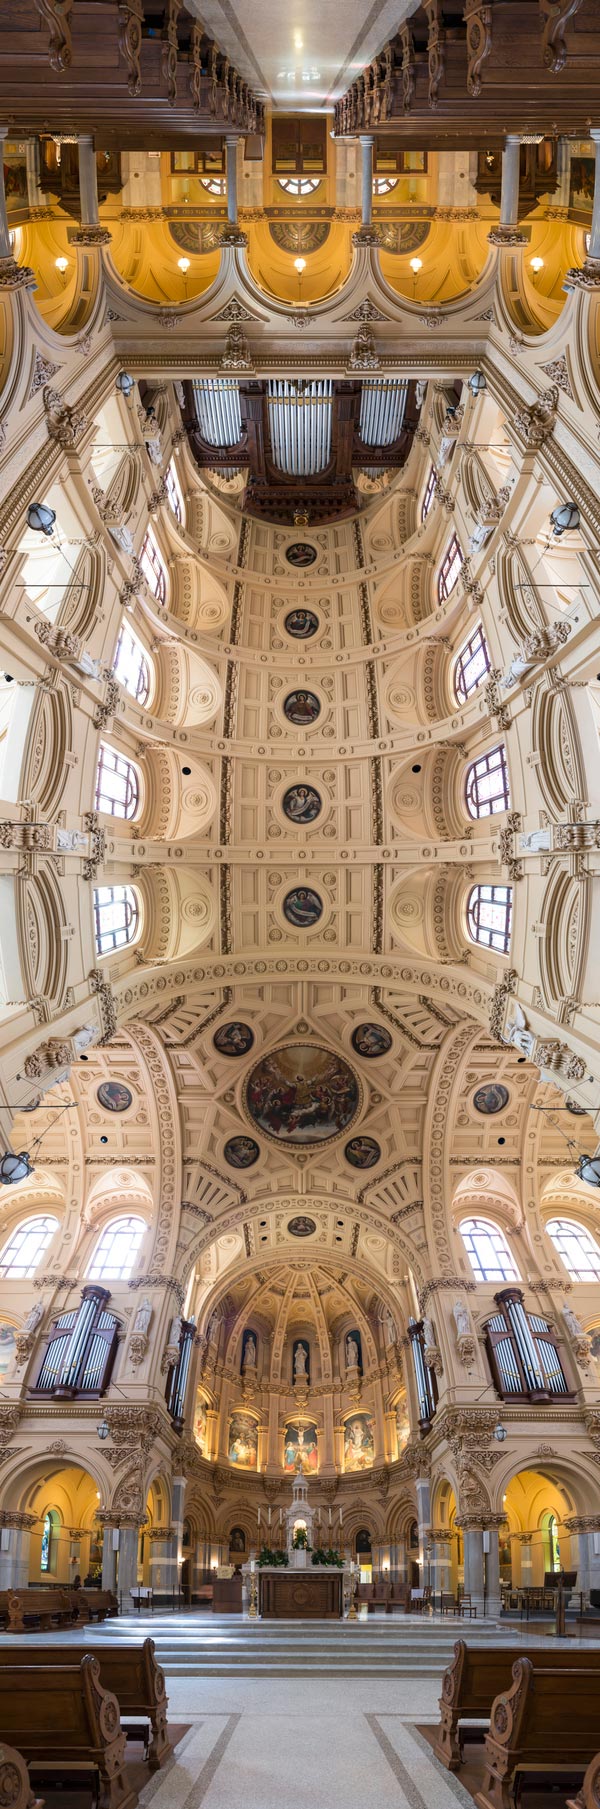 vertical panoramas of church ceilings 1 Amazing Vertical Panoramas of Church Ceilings